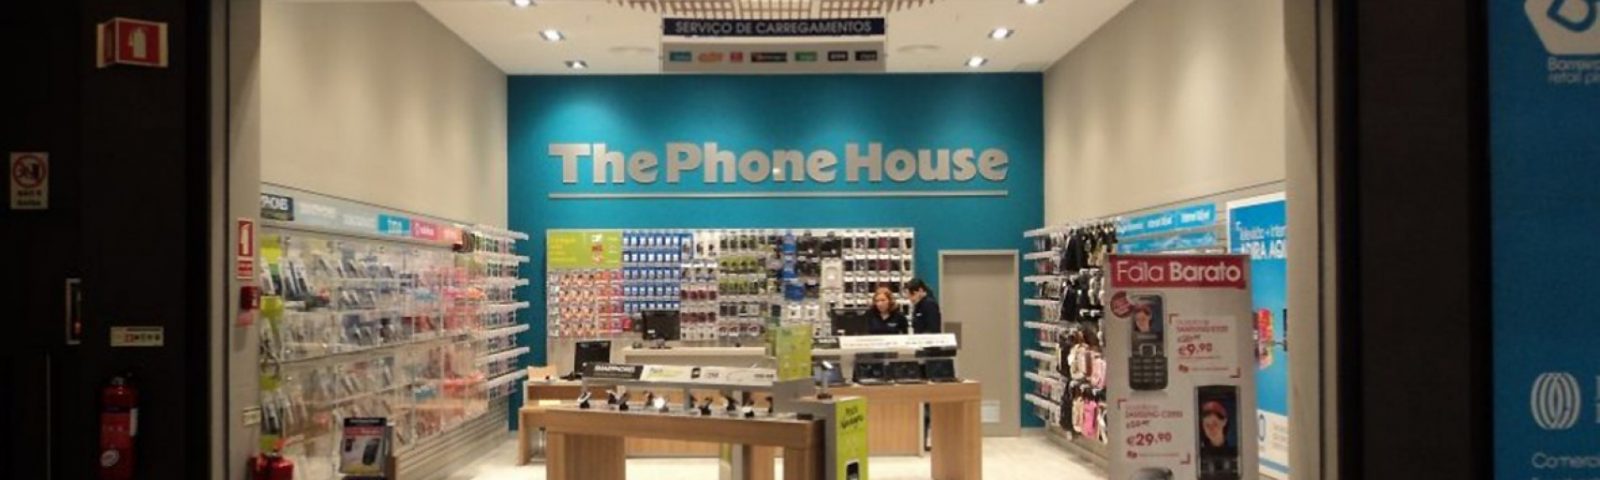 Phone House soma novas unidades